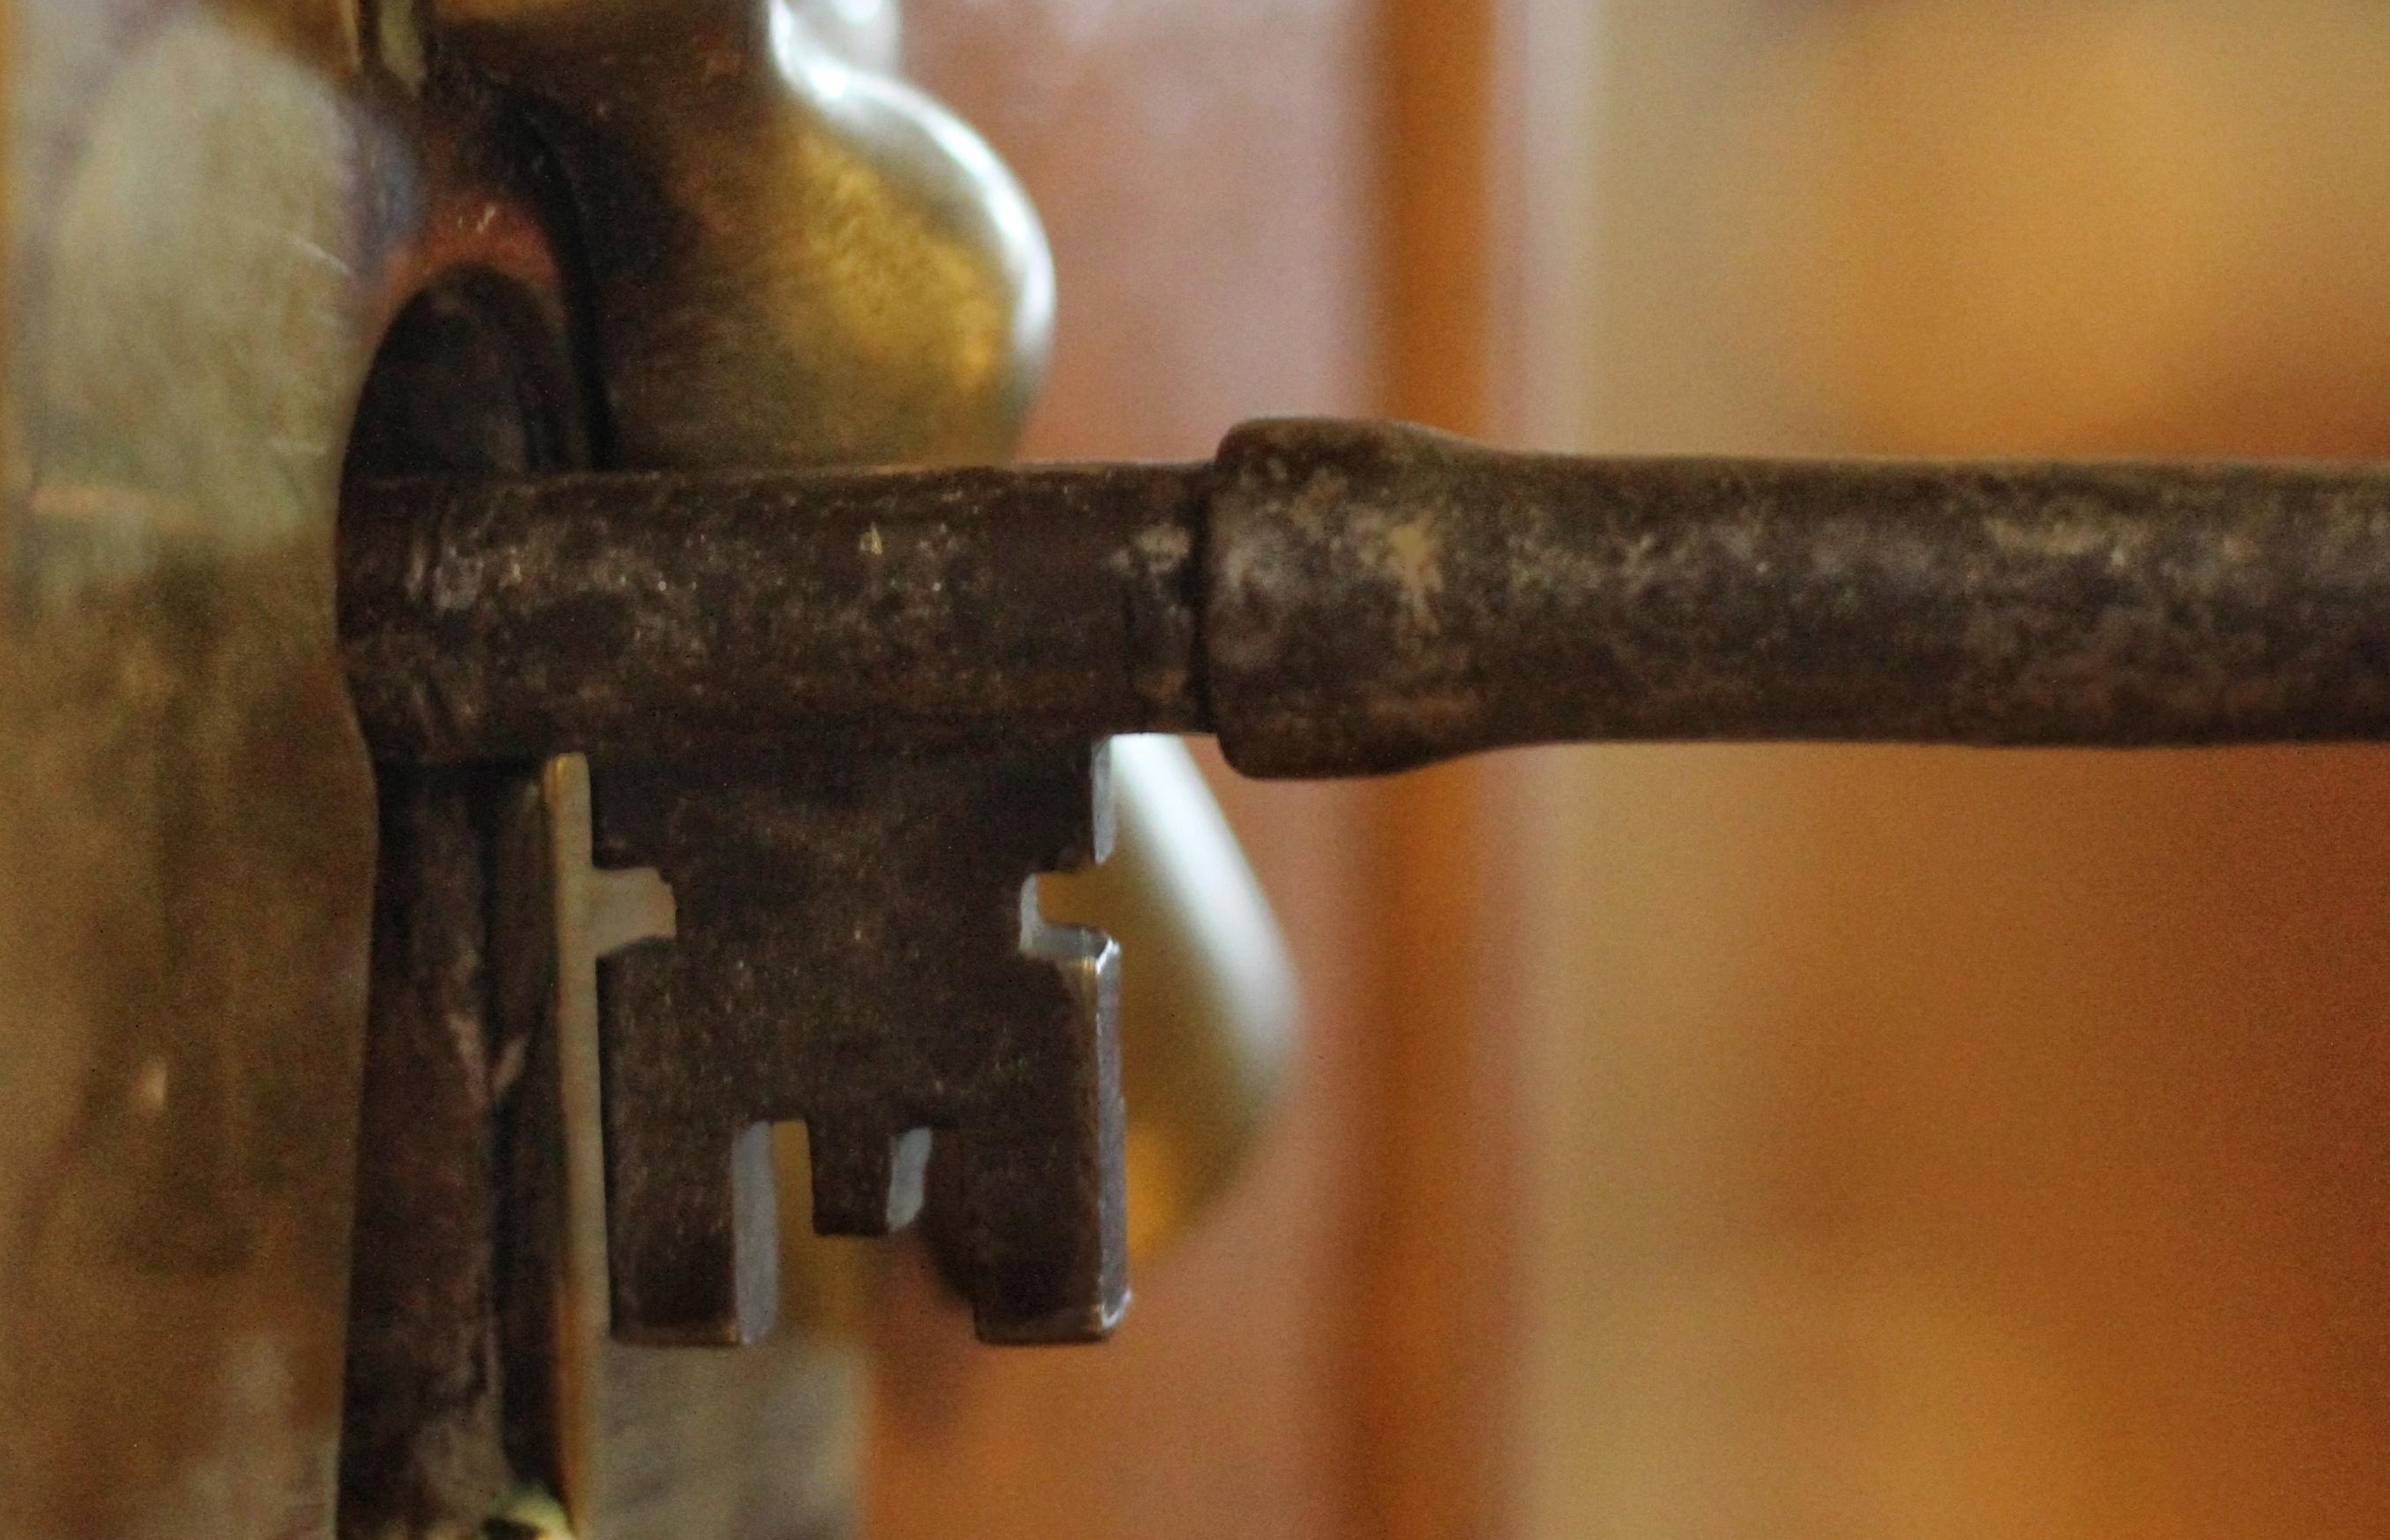 Old-fashioned key unlocking a door